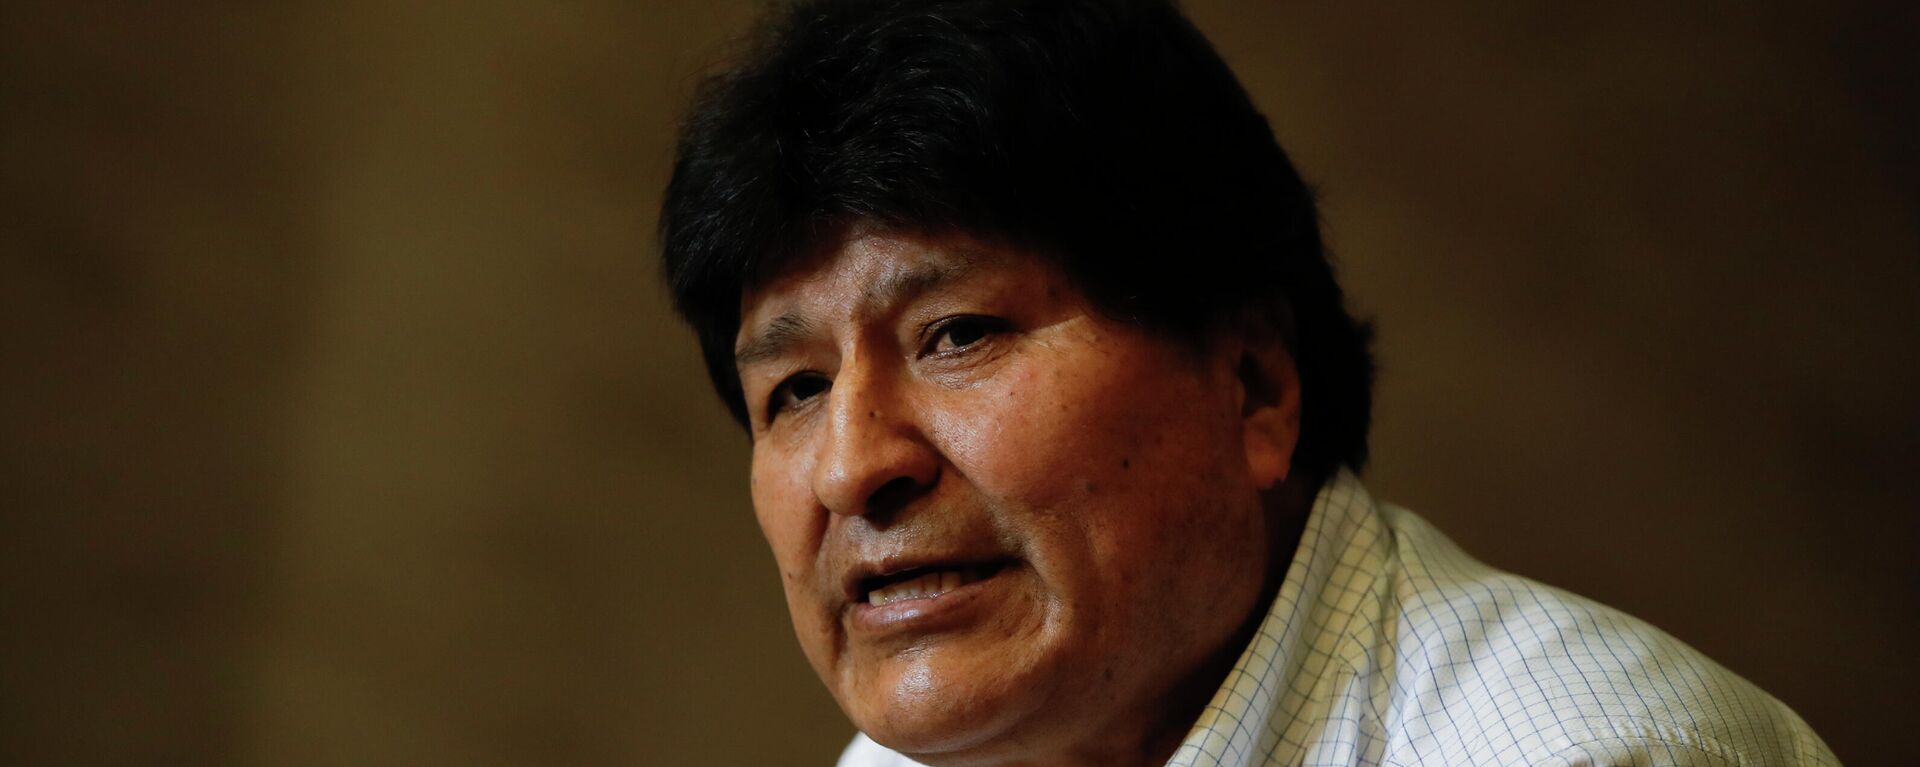 El expresidente socialista boliviano Evo Morales (2006-2019) - Sputnik Mundo, 1920, 22.03.2022